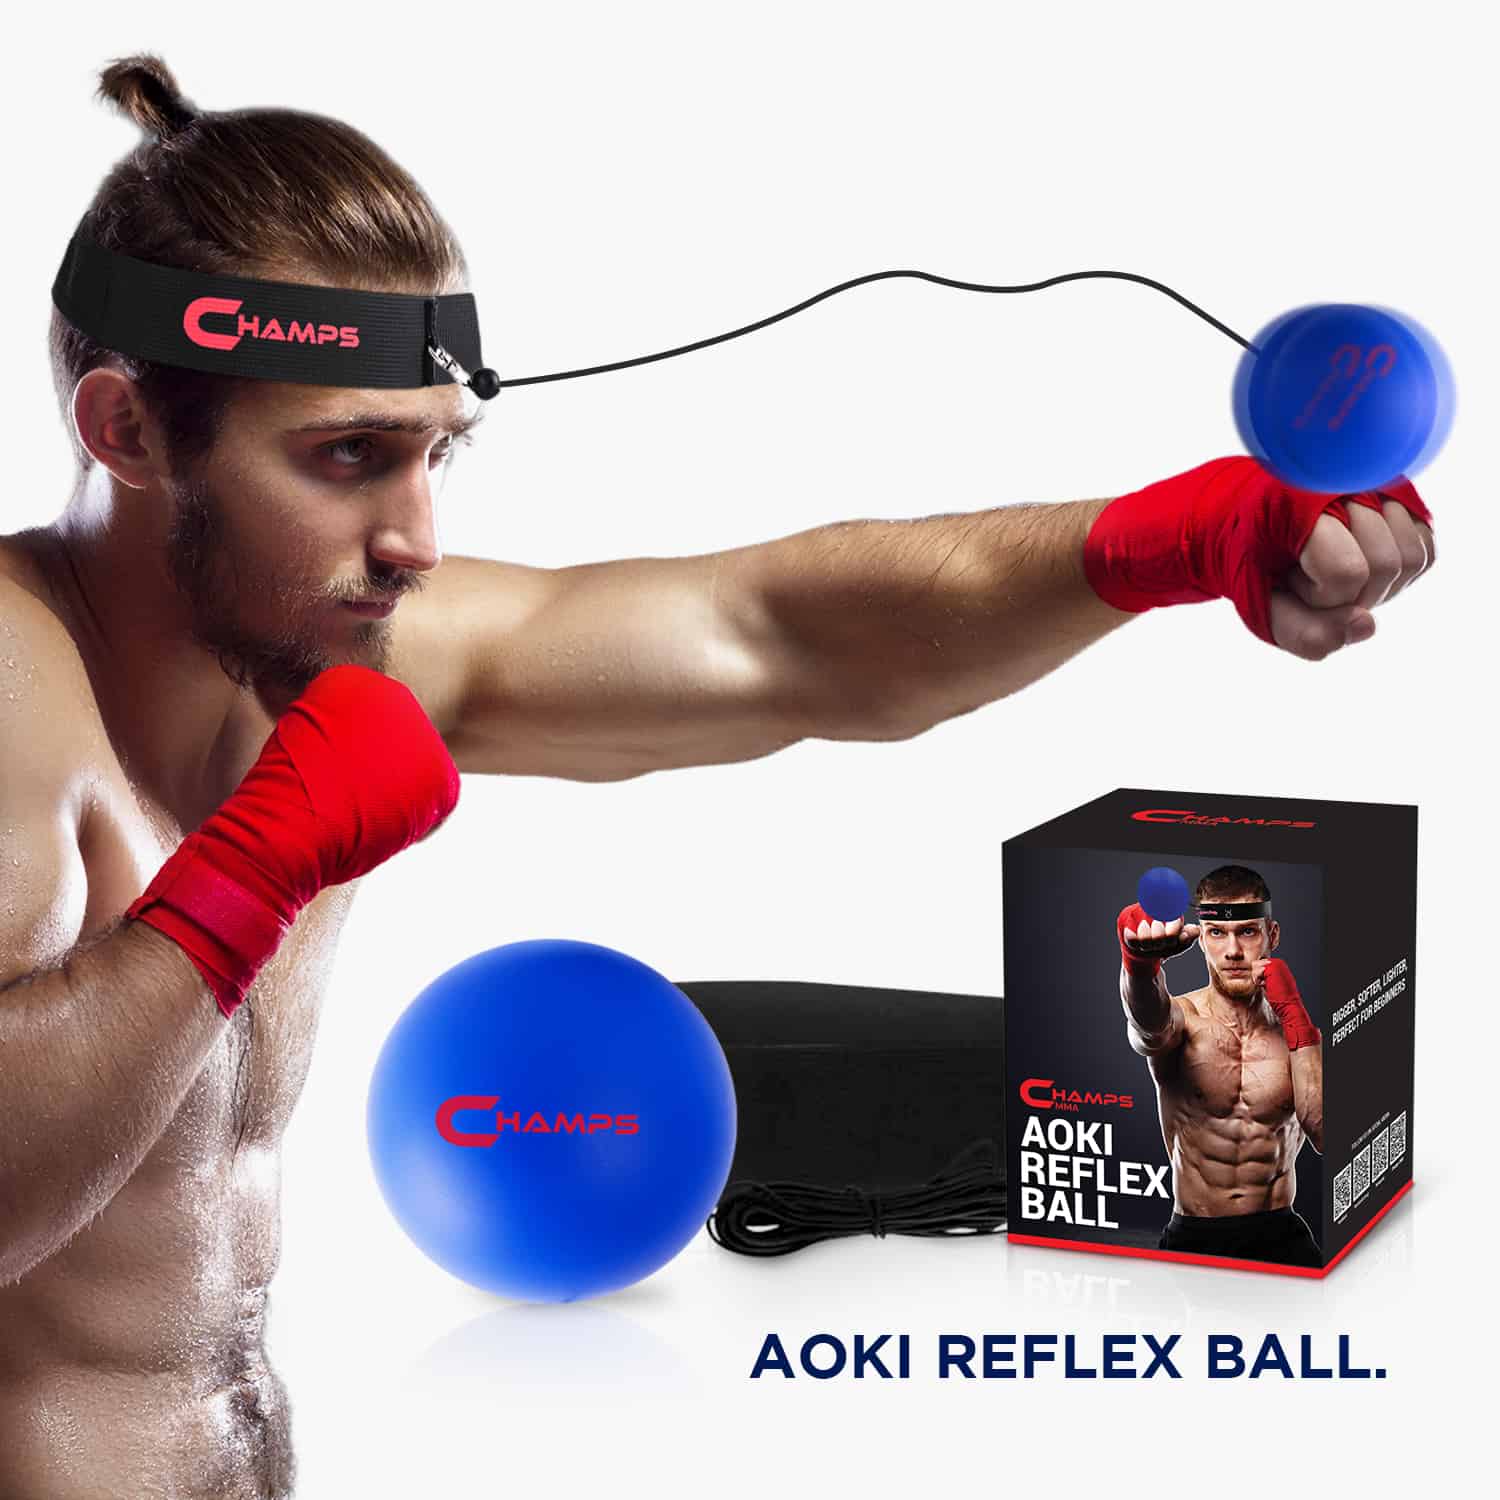 Boxing Equipment - Why the Reflex Ball is not a Reflex Ball 